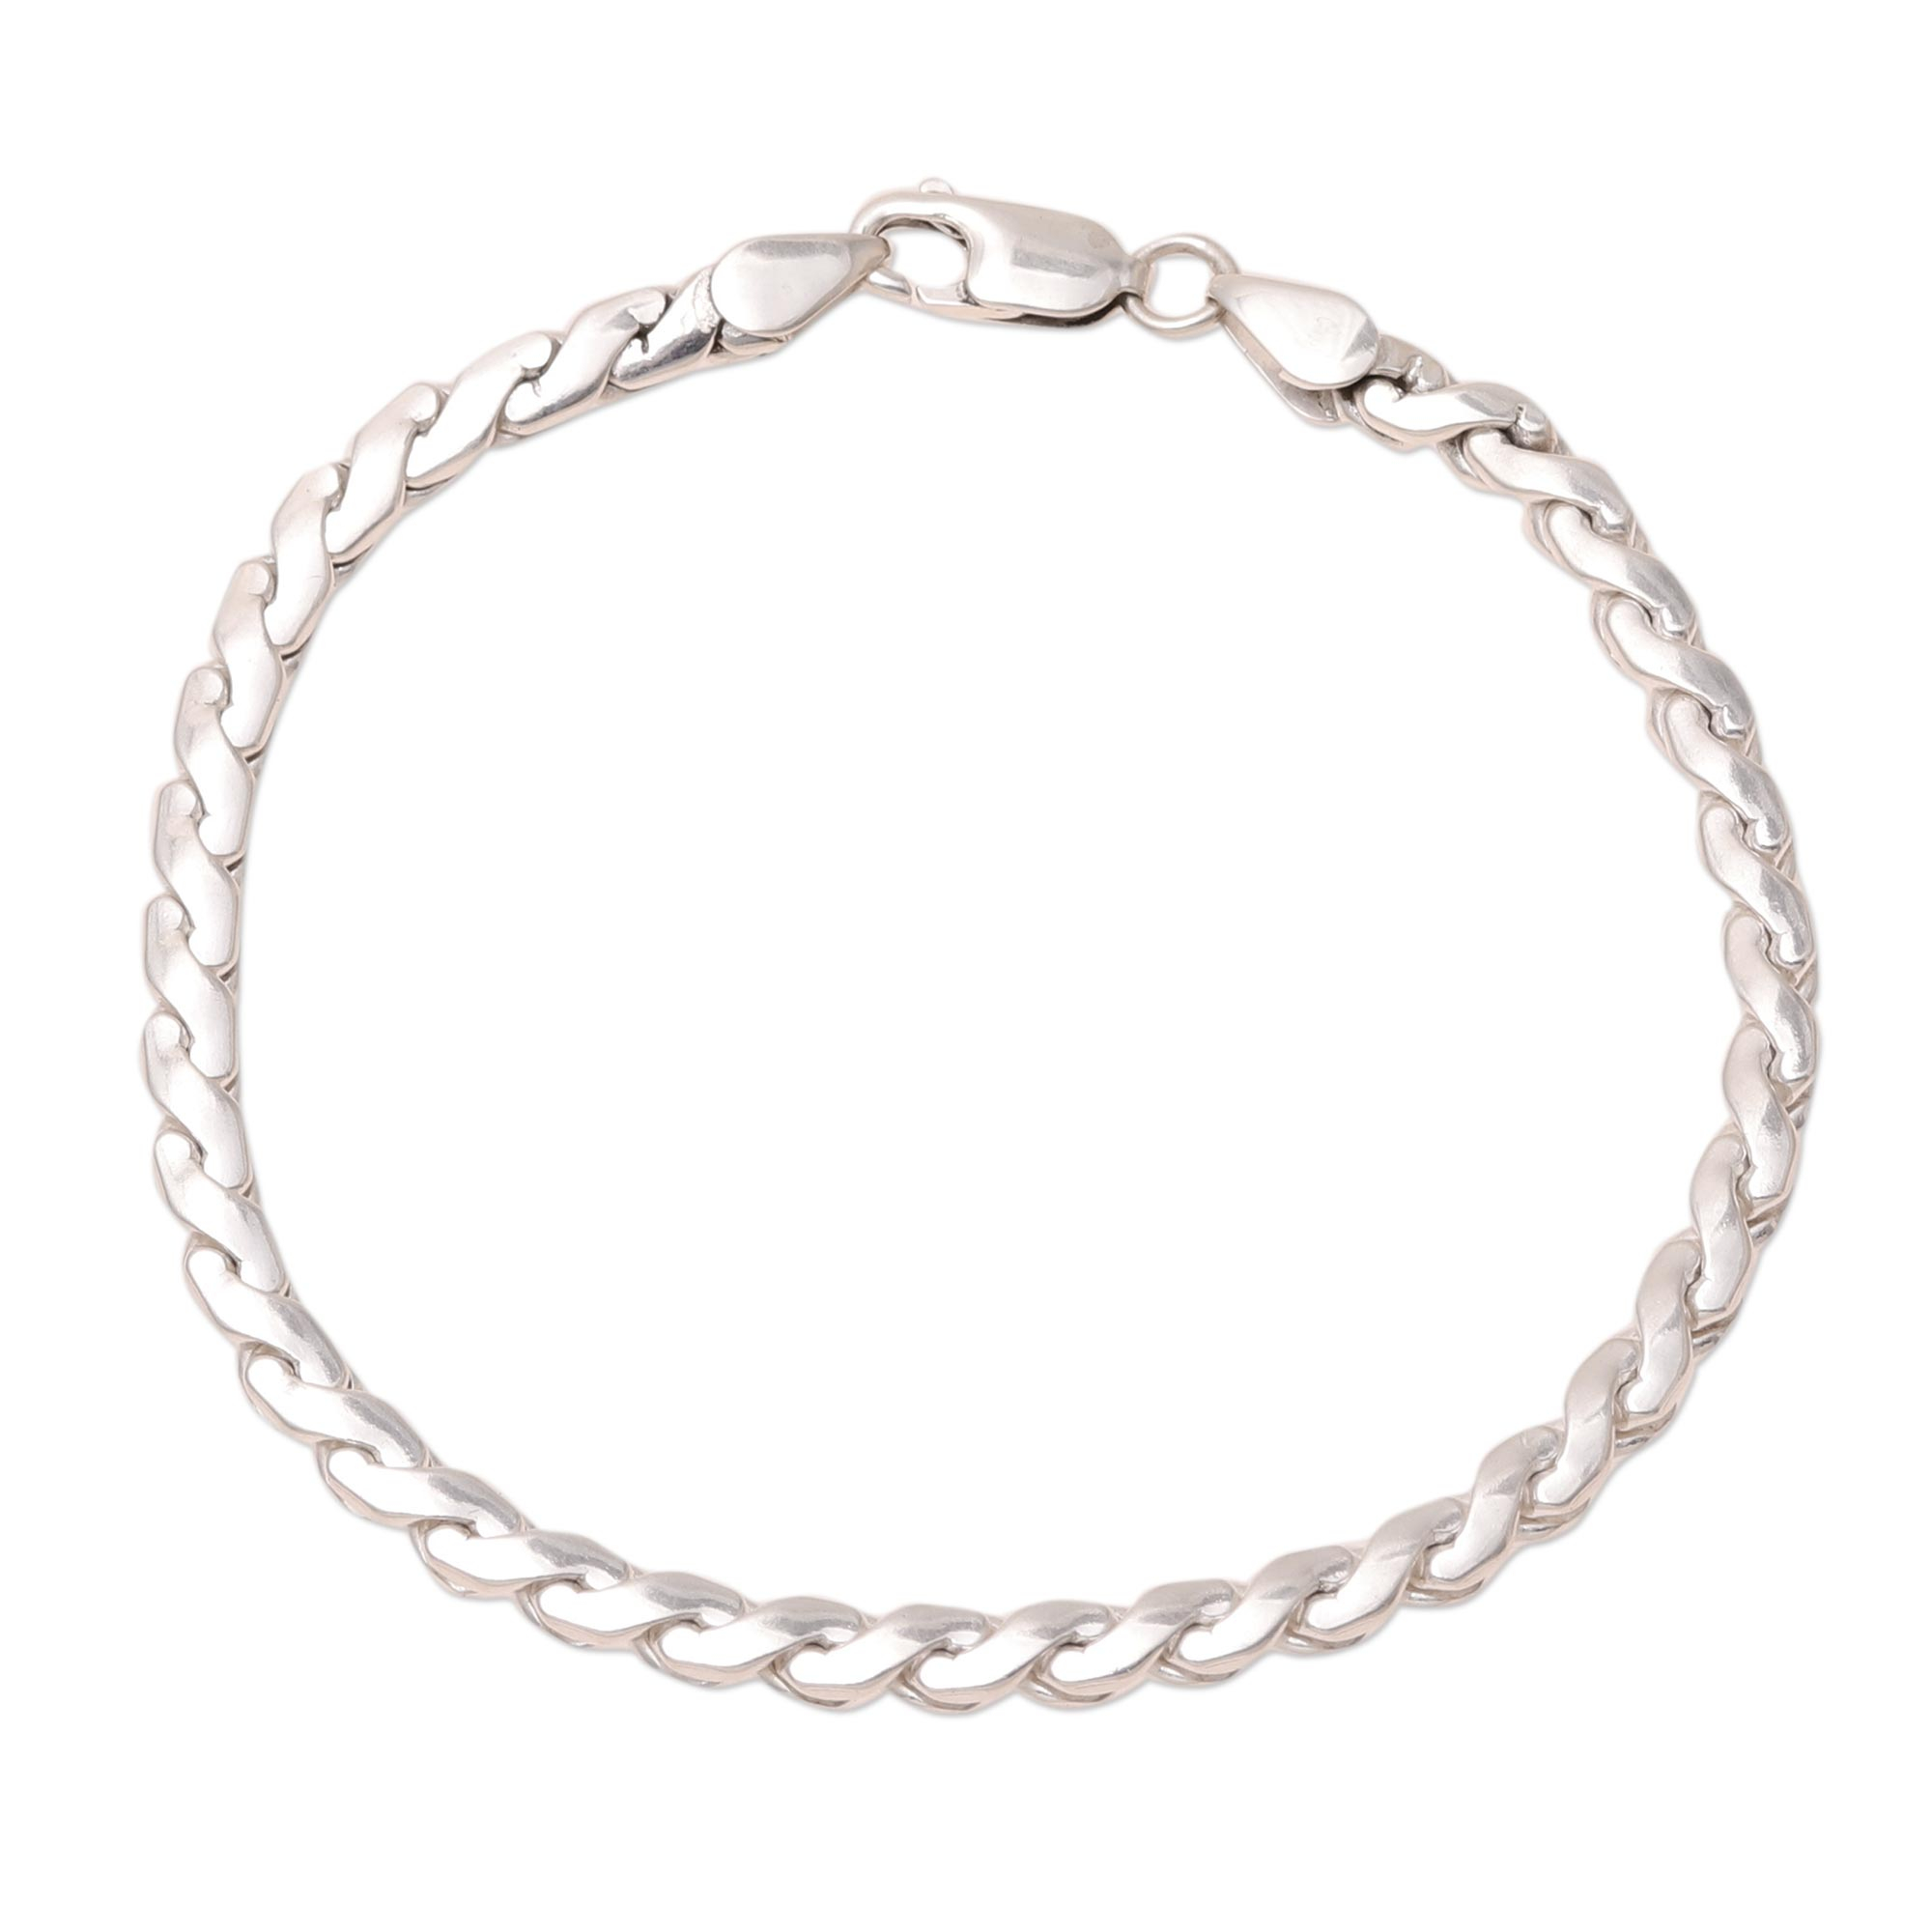 Sterling Silver Serpentine Chain Bracelet from India - Serpentine Gleam ...